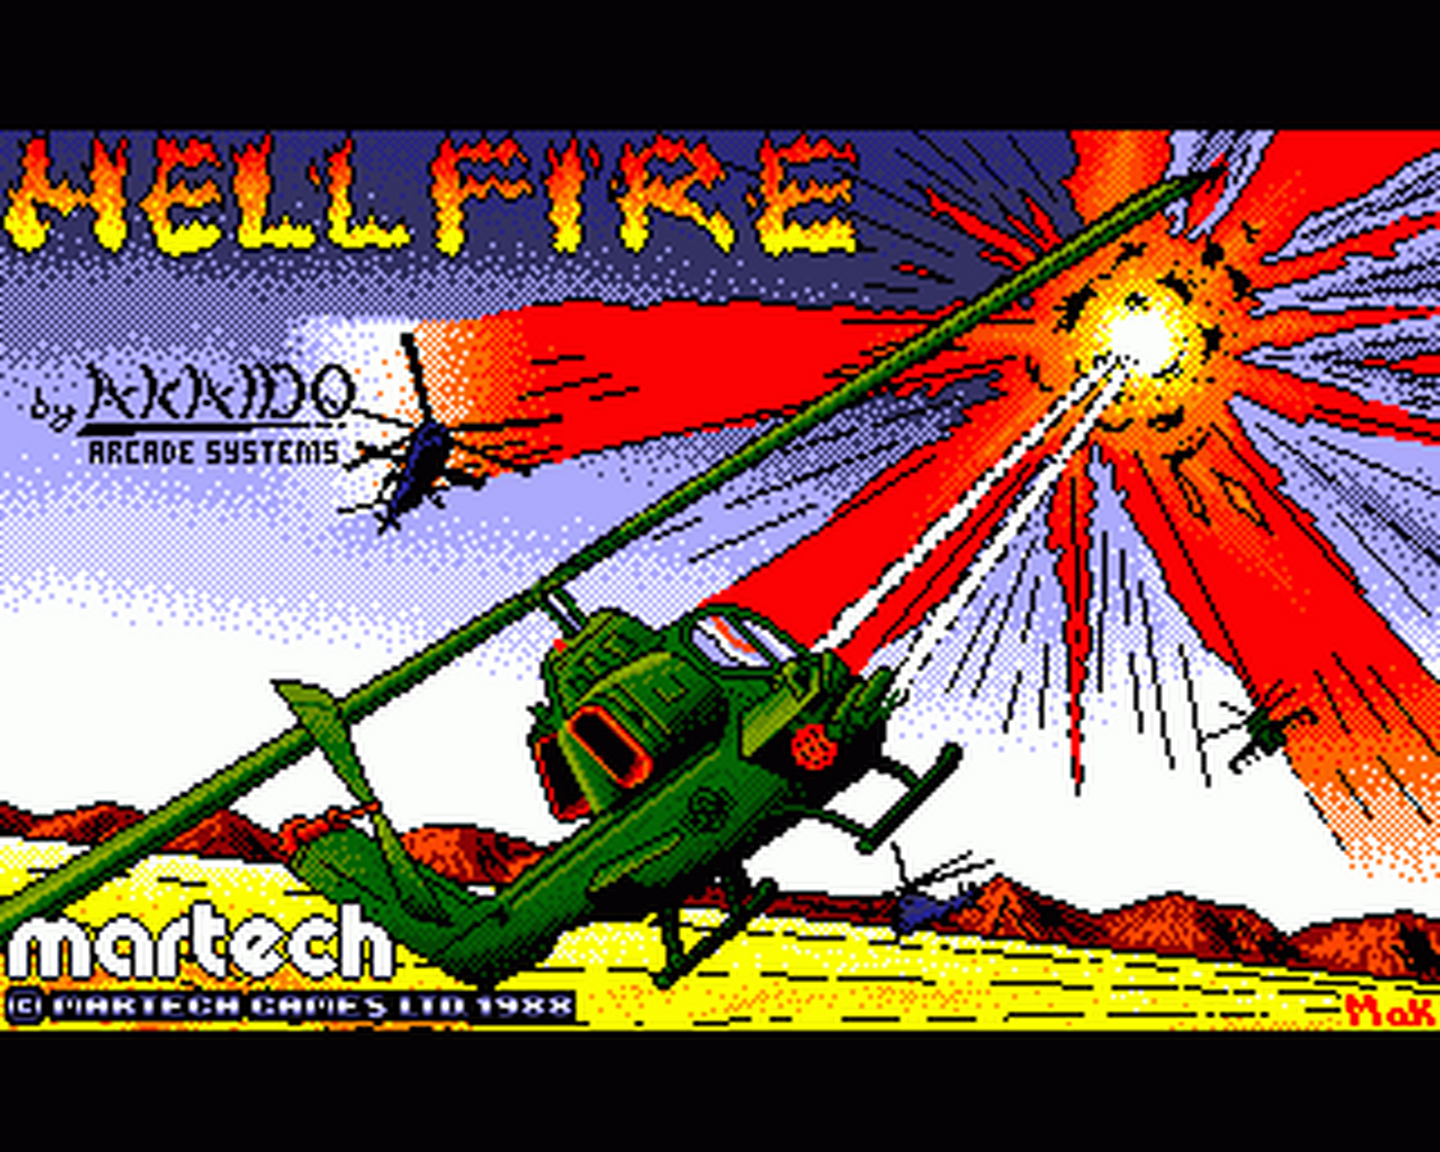 Amiga GameBase Hellfire_Attack Martech 1988